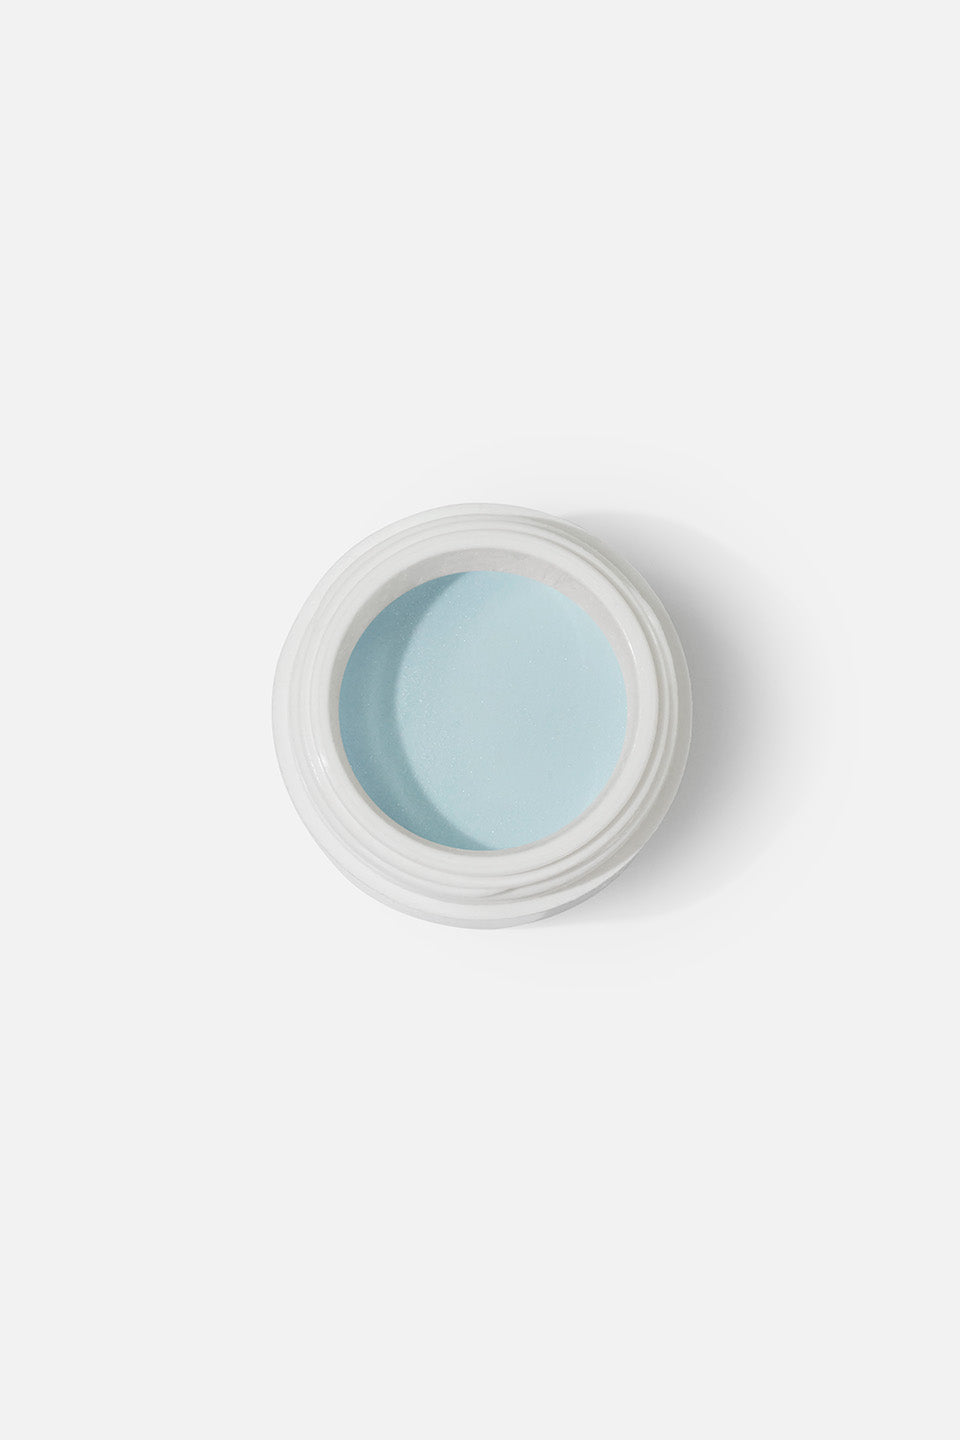 Polvo acrílico azul pastel 5 g